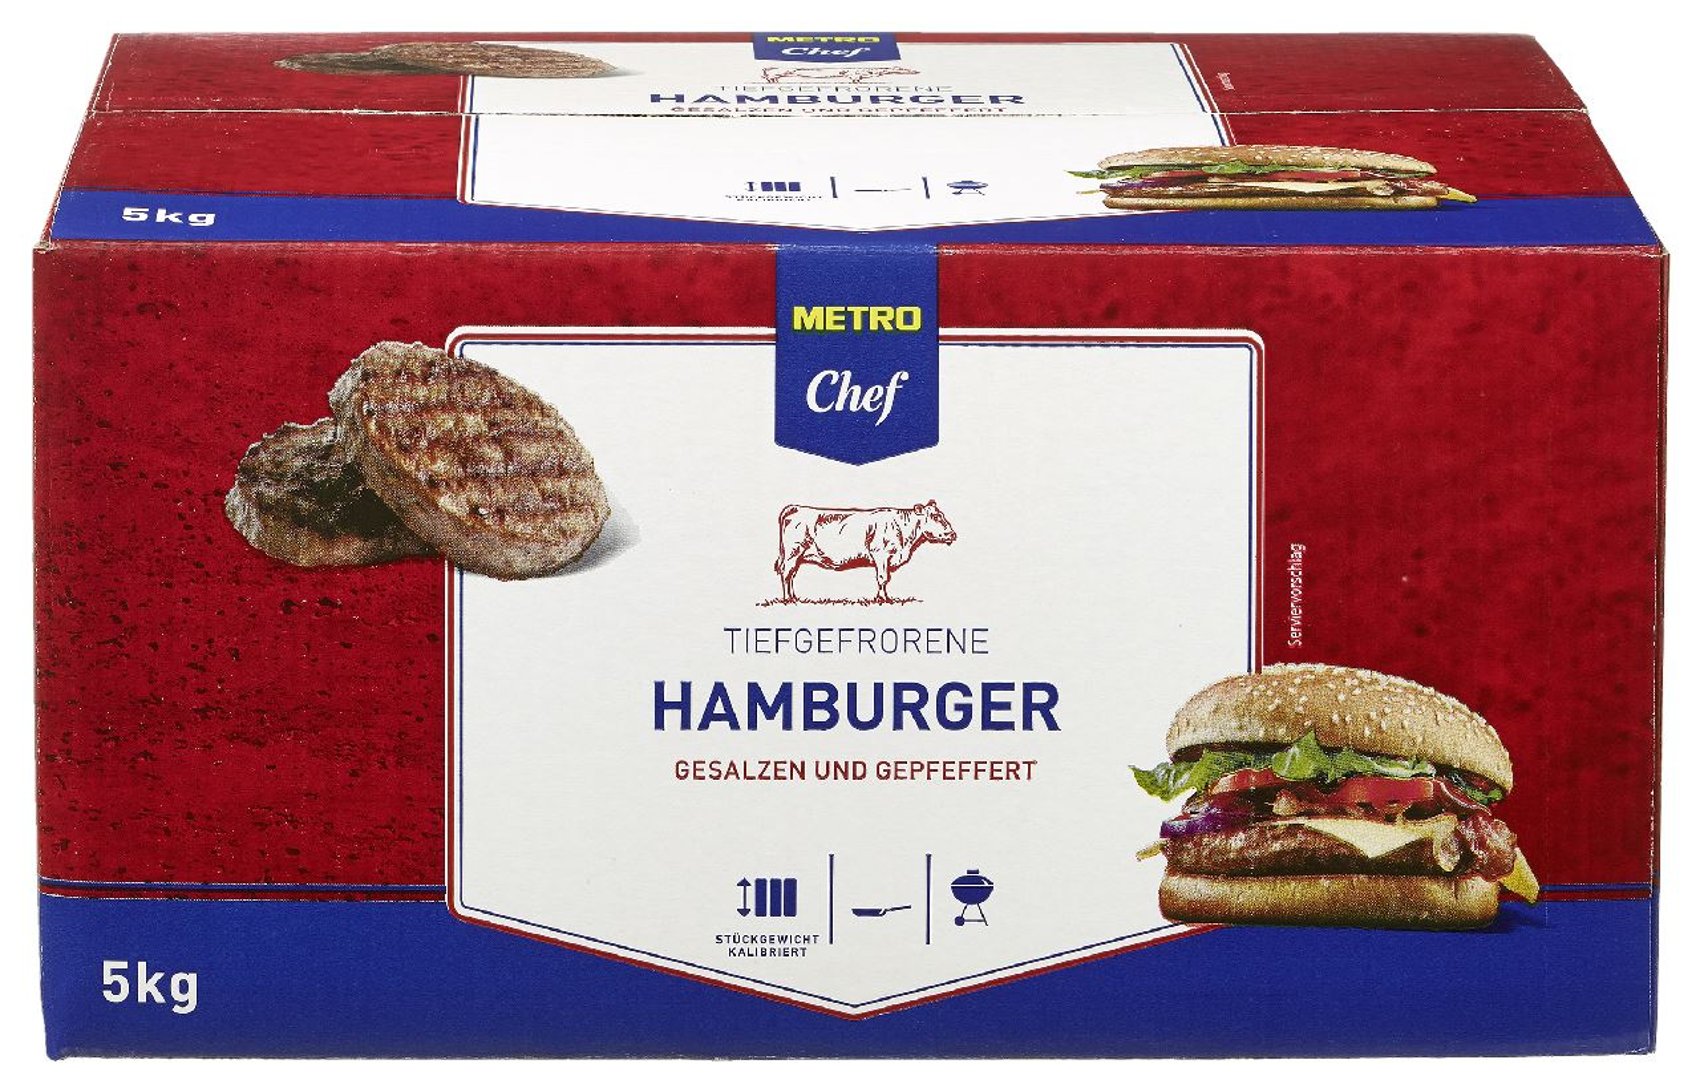 METRO Chef - Hamburger Patty, 40 Stück à ca. 125 g, tiefgefroren - 5 kg Karton